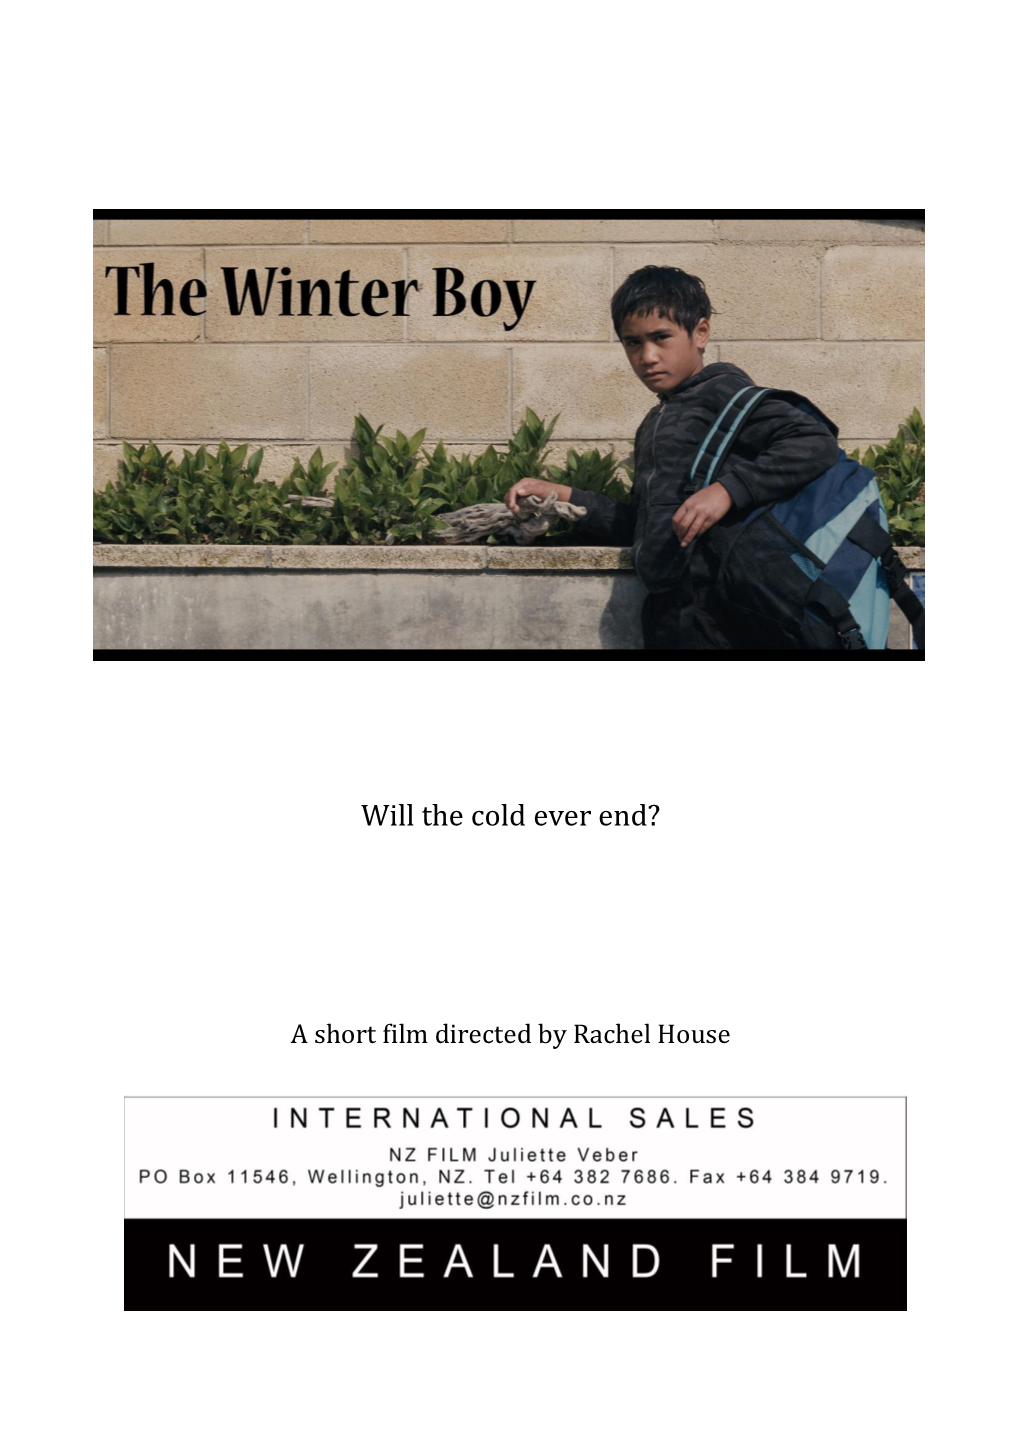 The Winter Boy Press